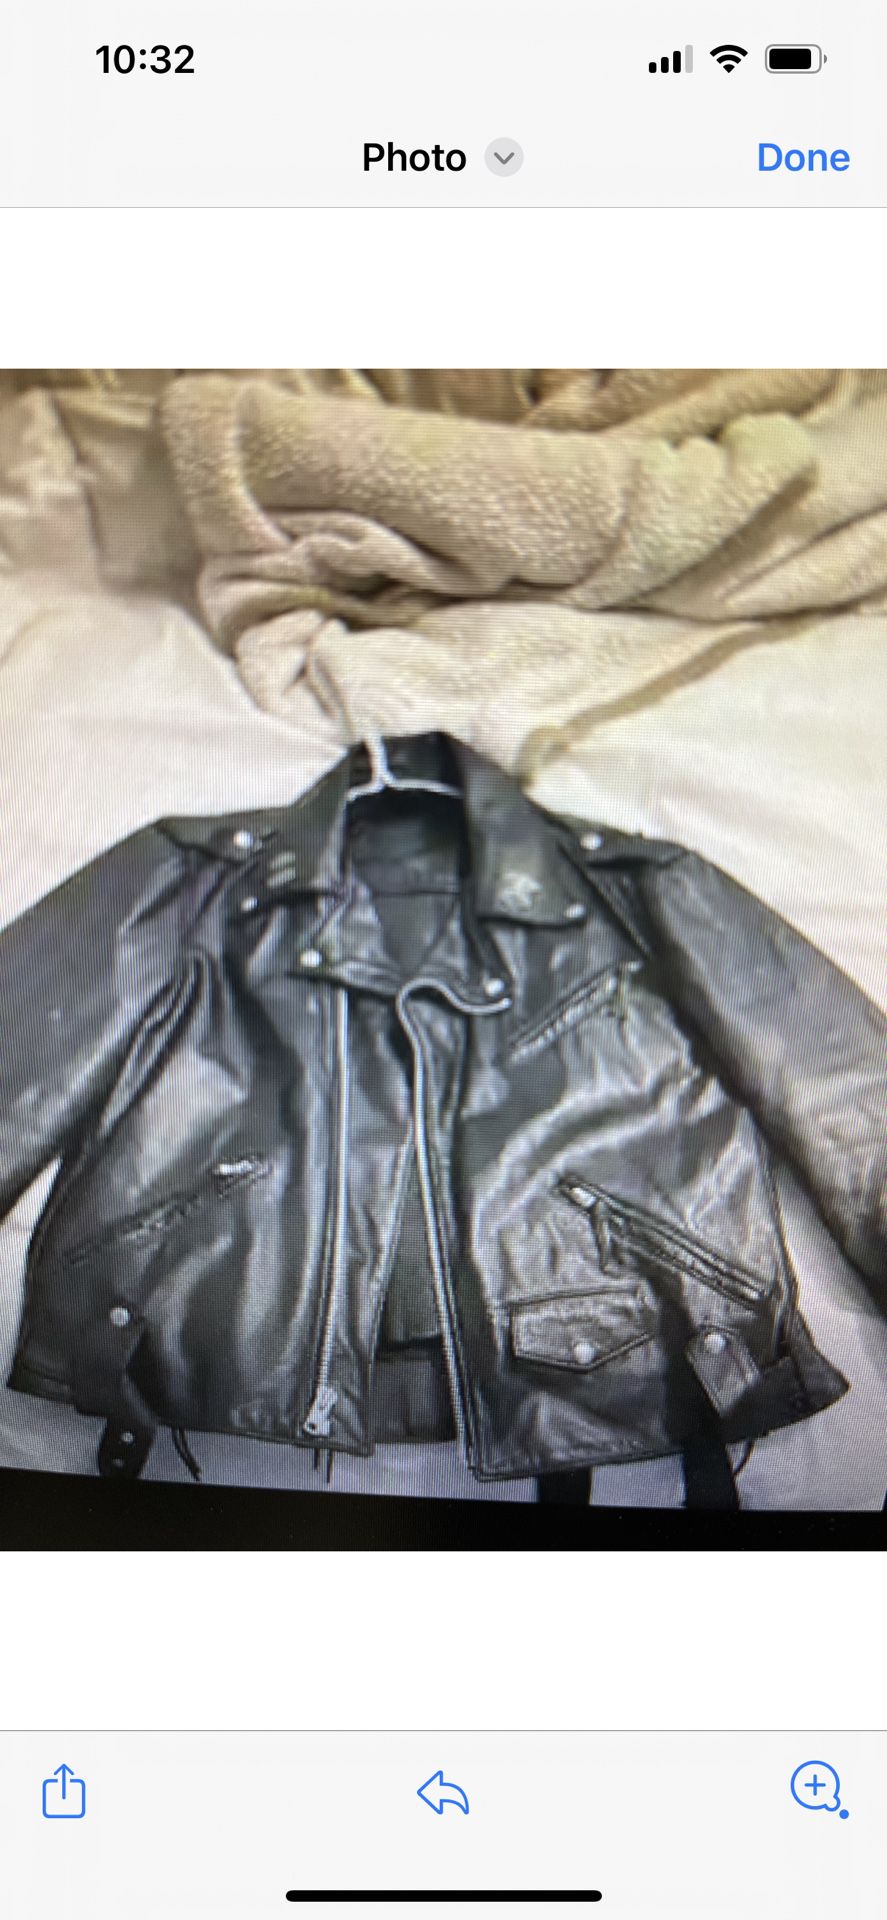 HD Leather jacket